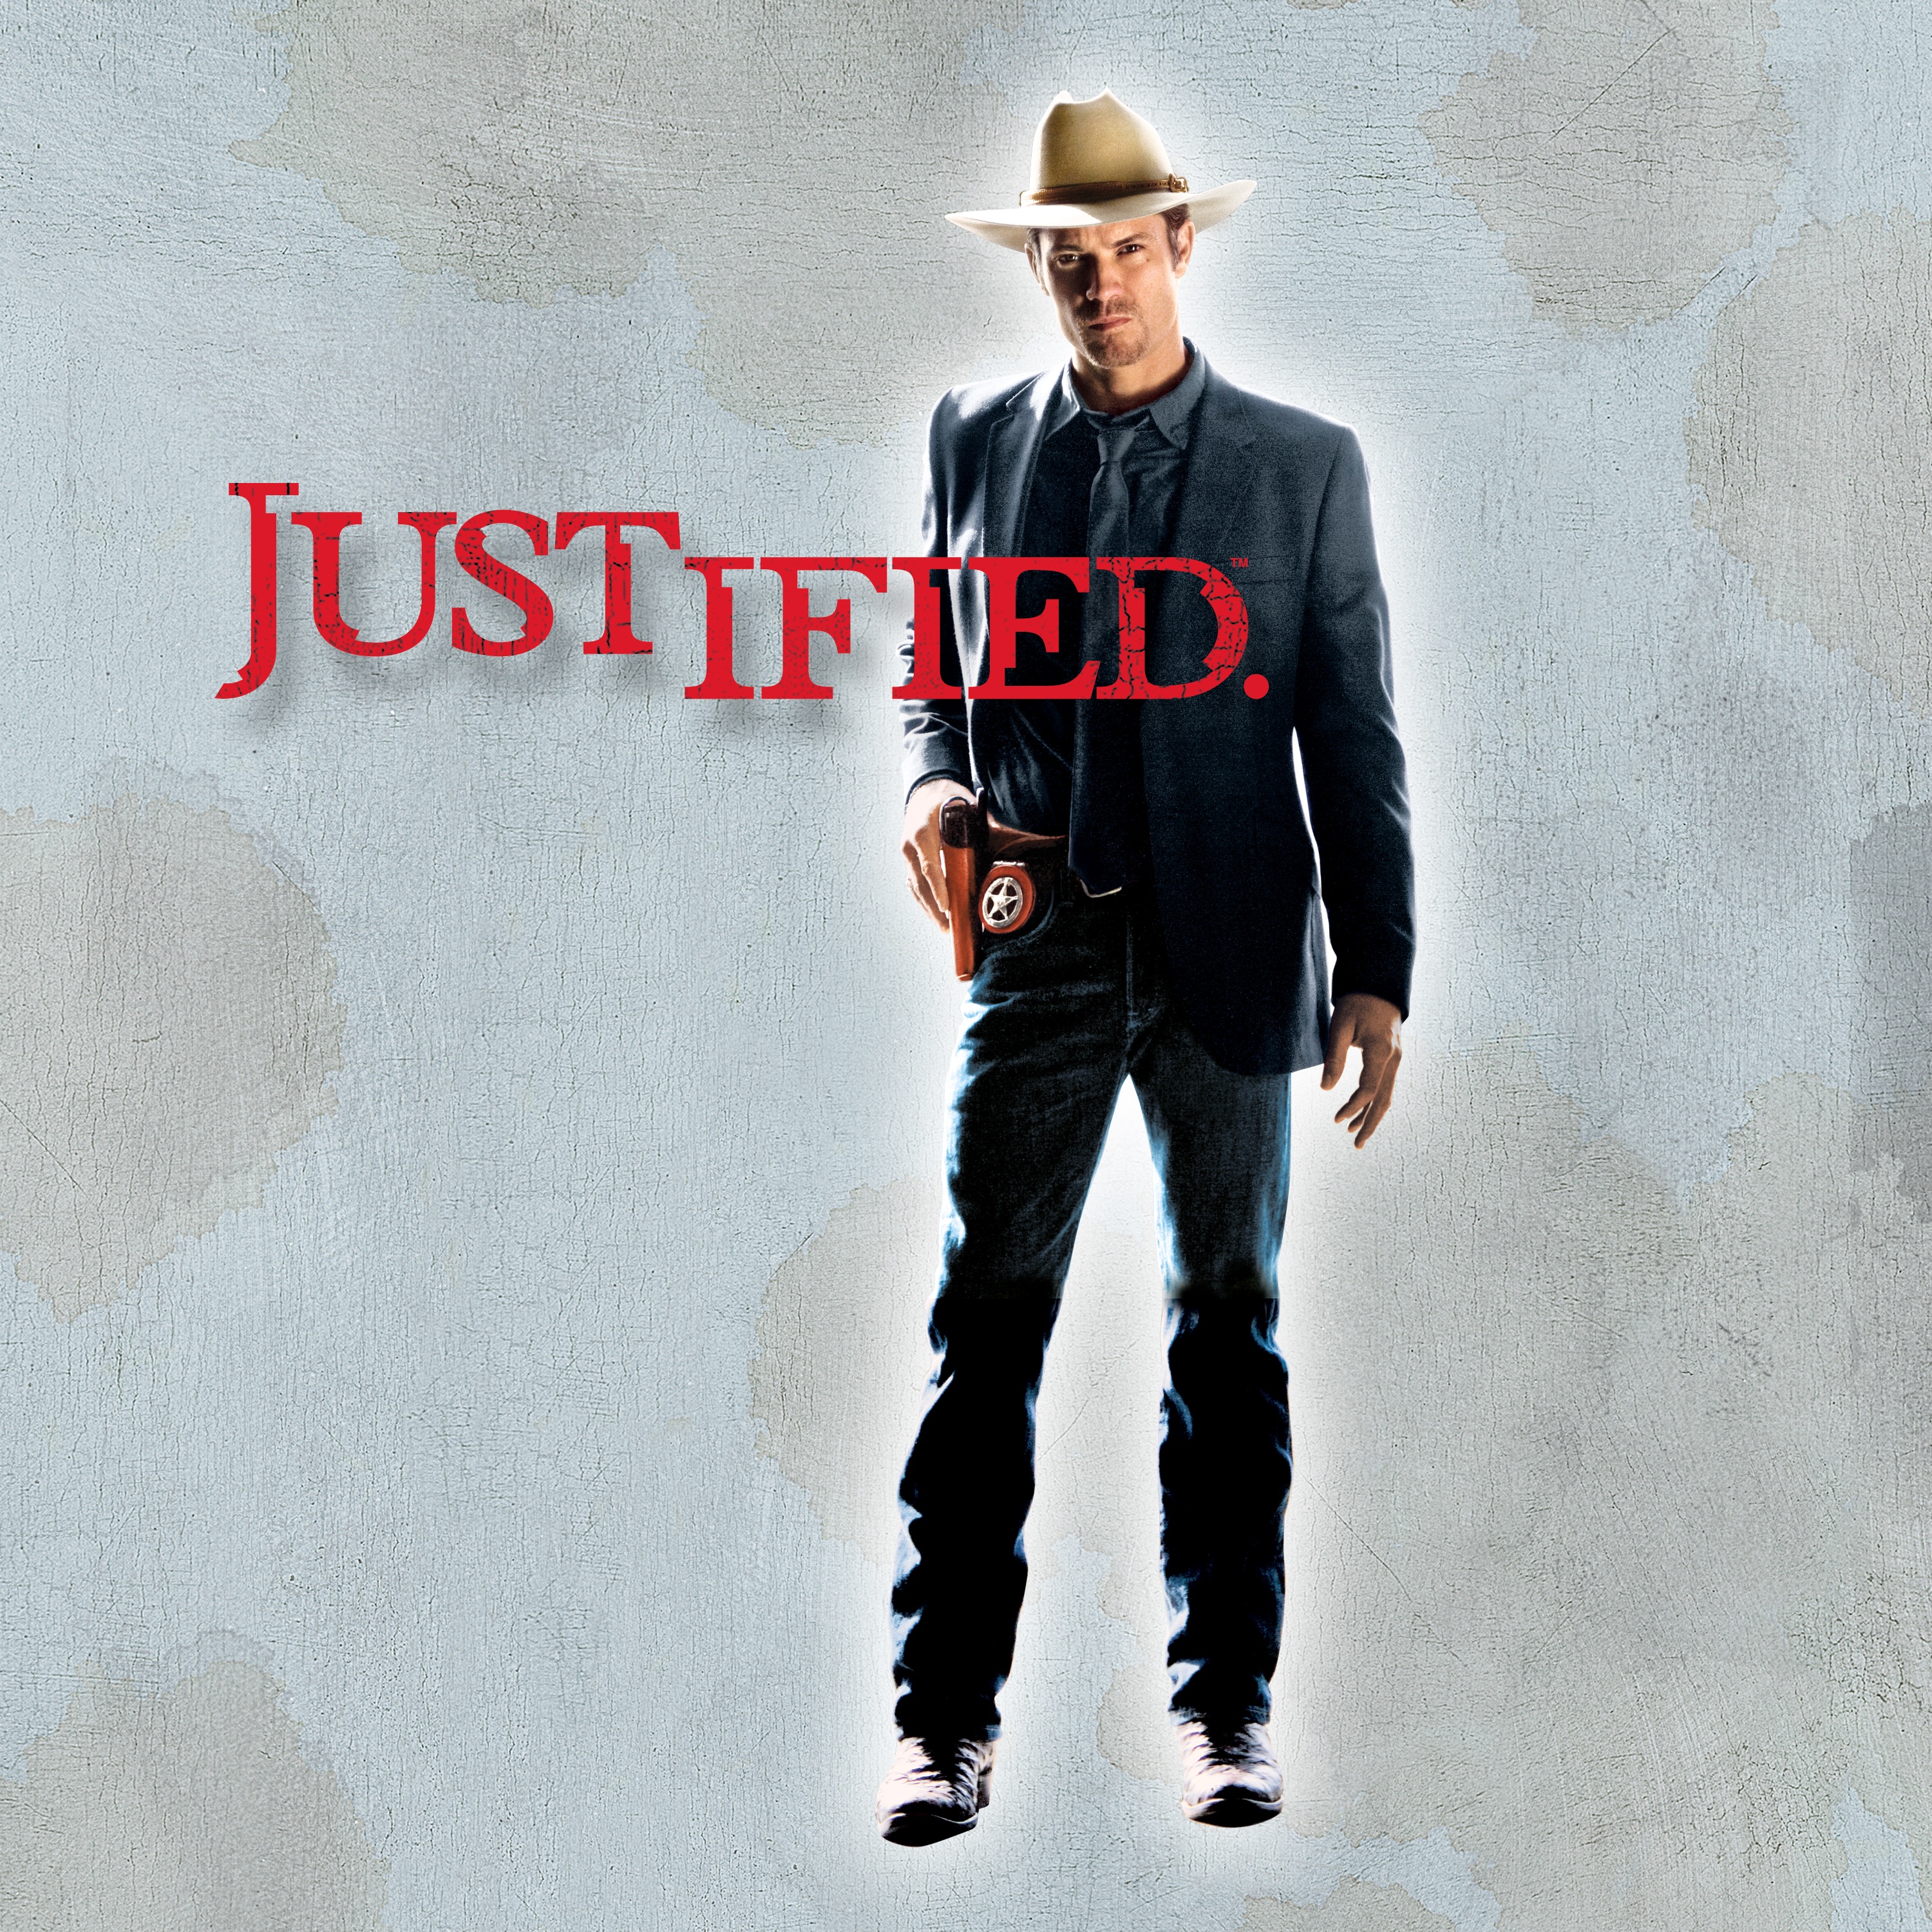 Justified, Season 1 on iTunes